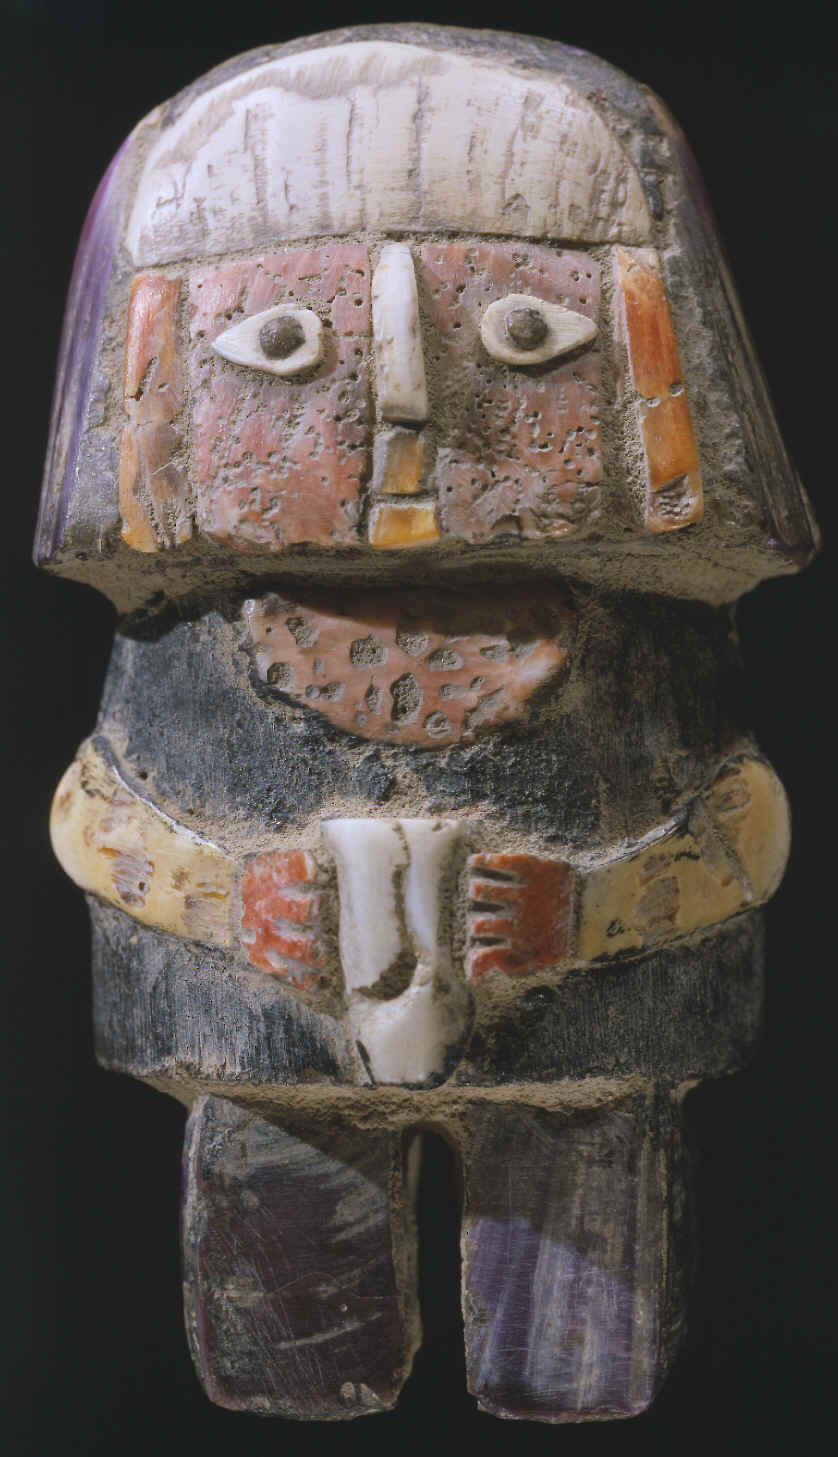 Inca culture carved female human figure.